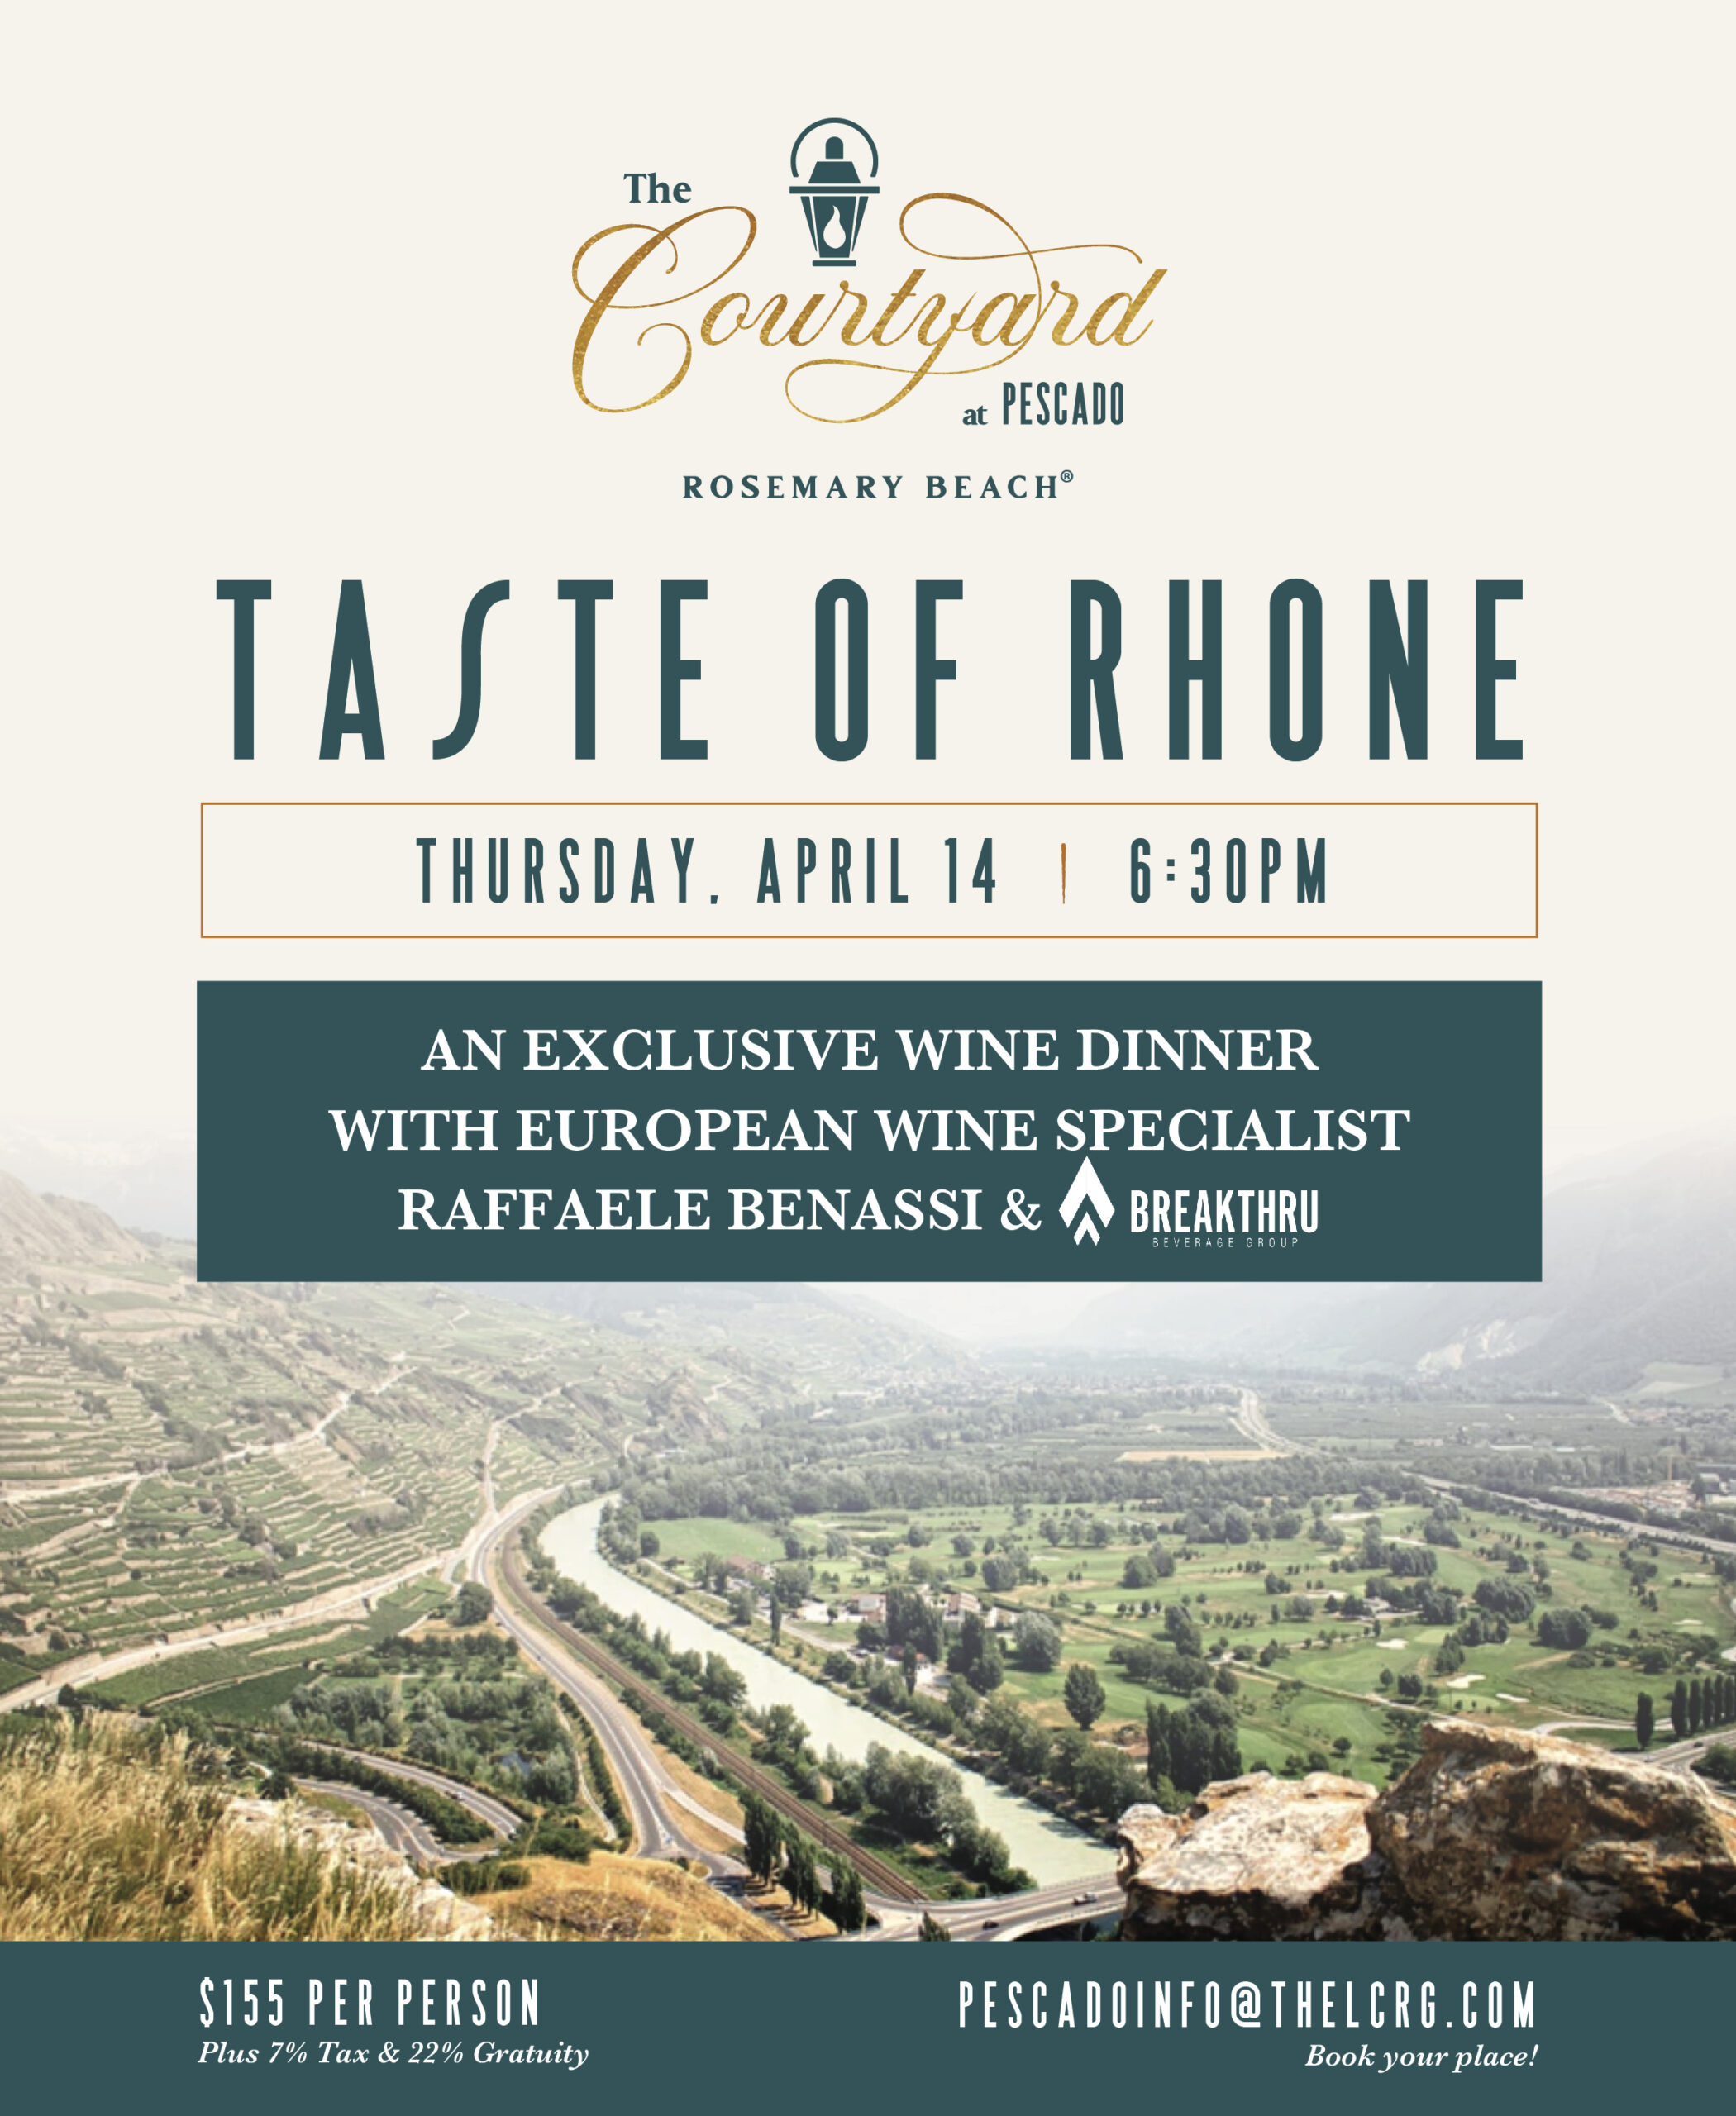 The Courtyard at Pescado to Host Taste of Rhone Wine Dinner